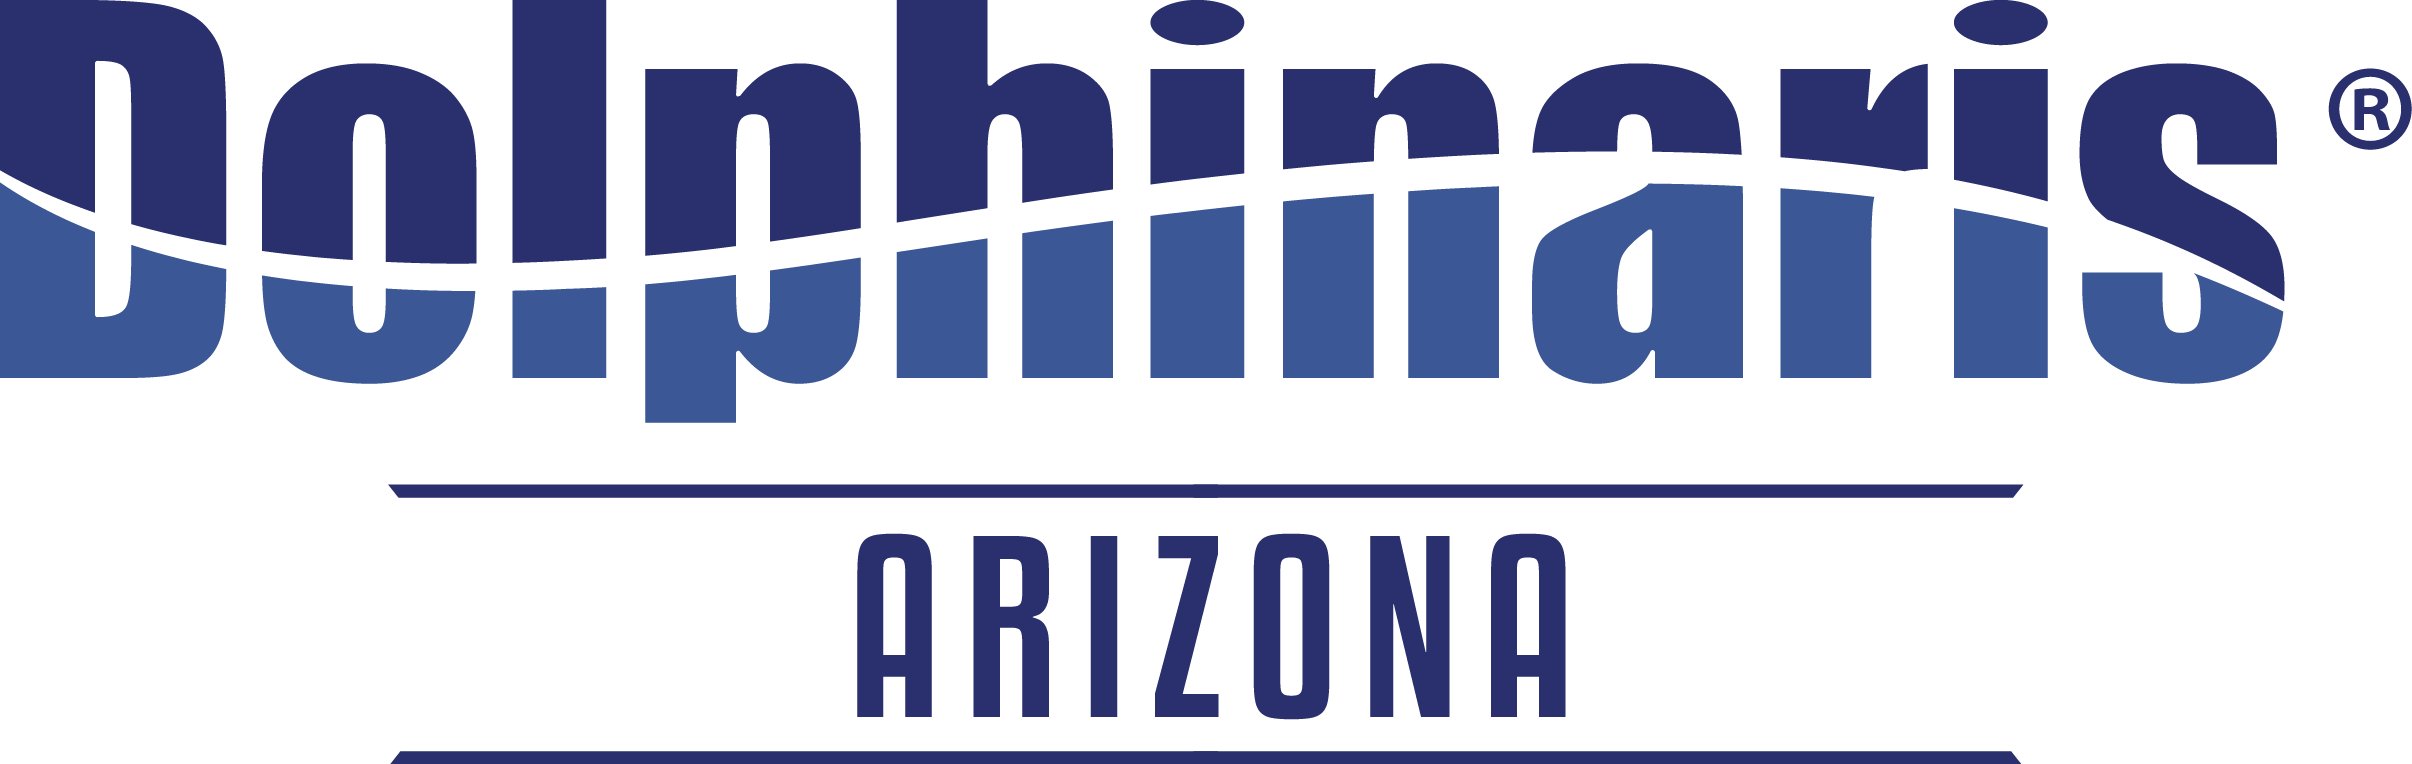 dolphinarisaz-logo-png-192334-original